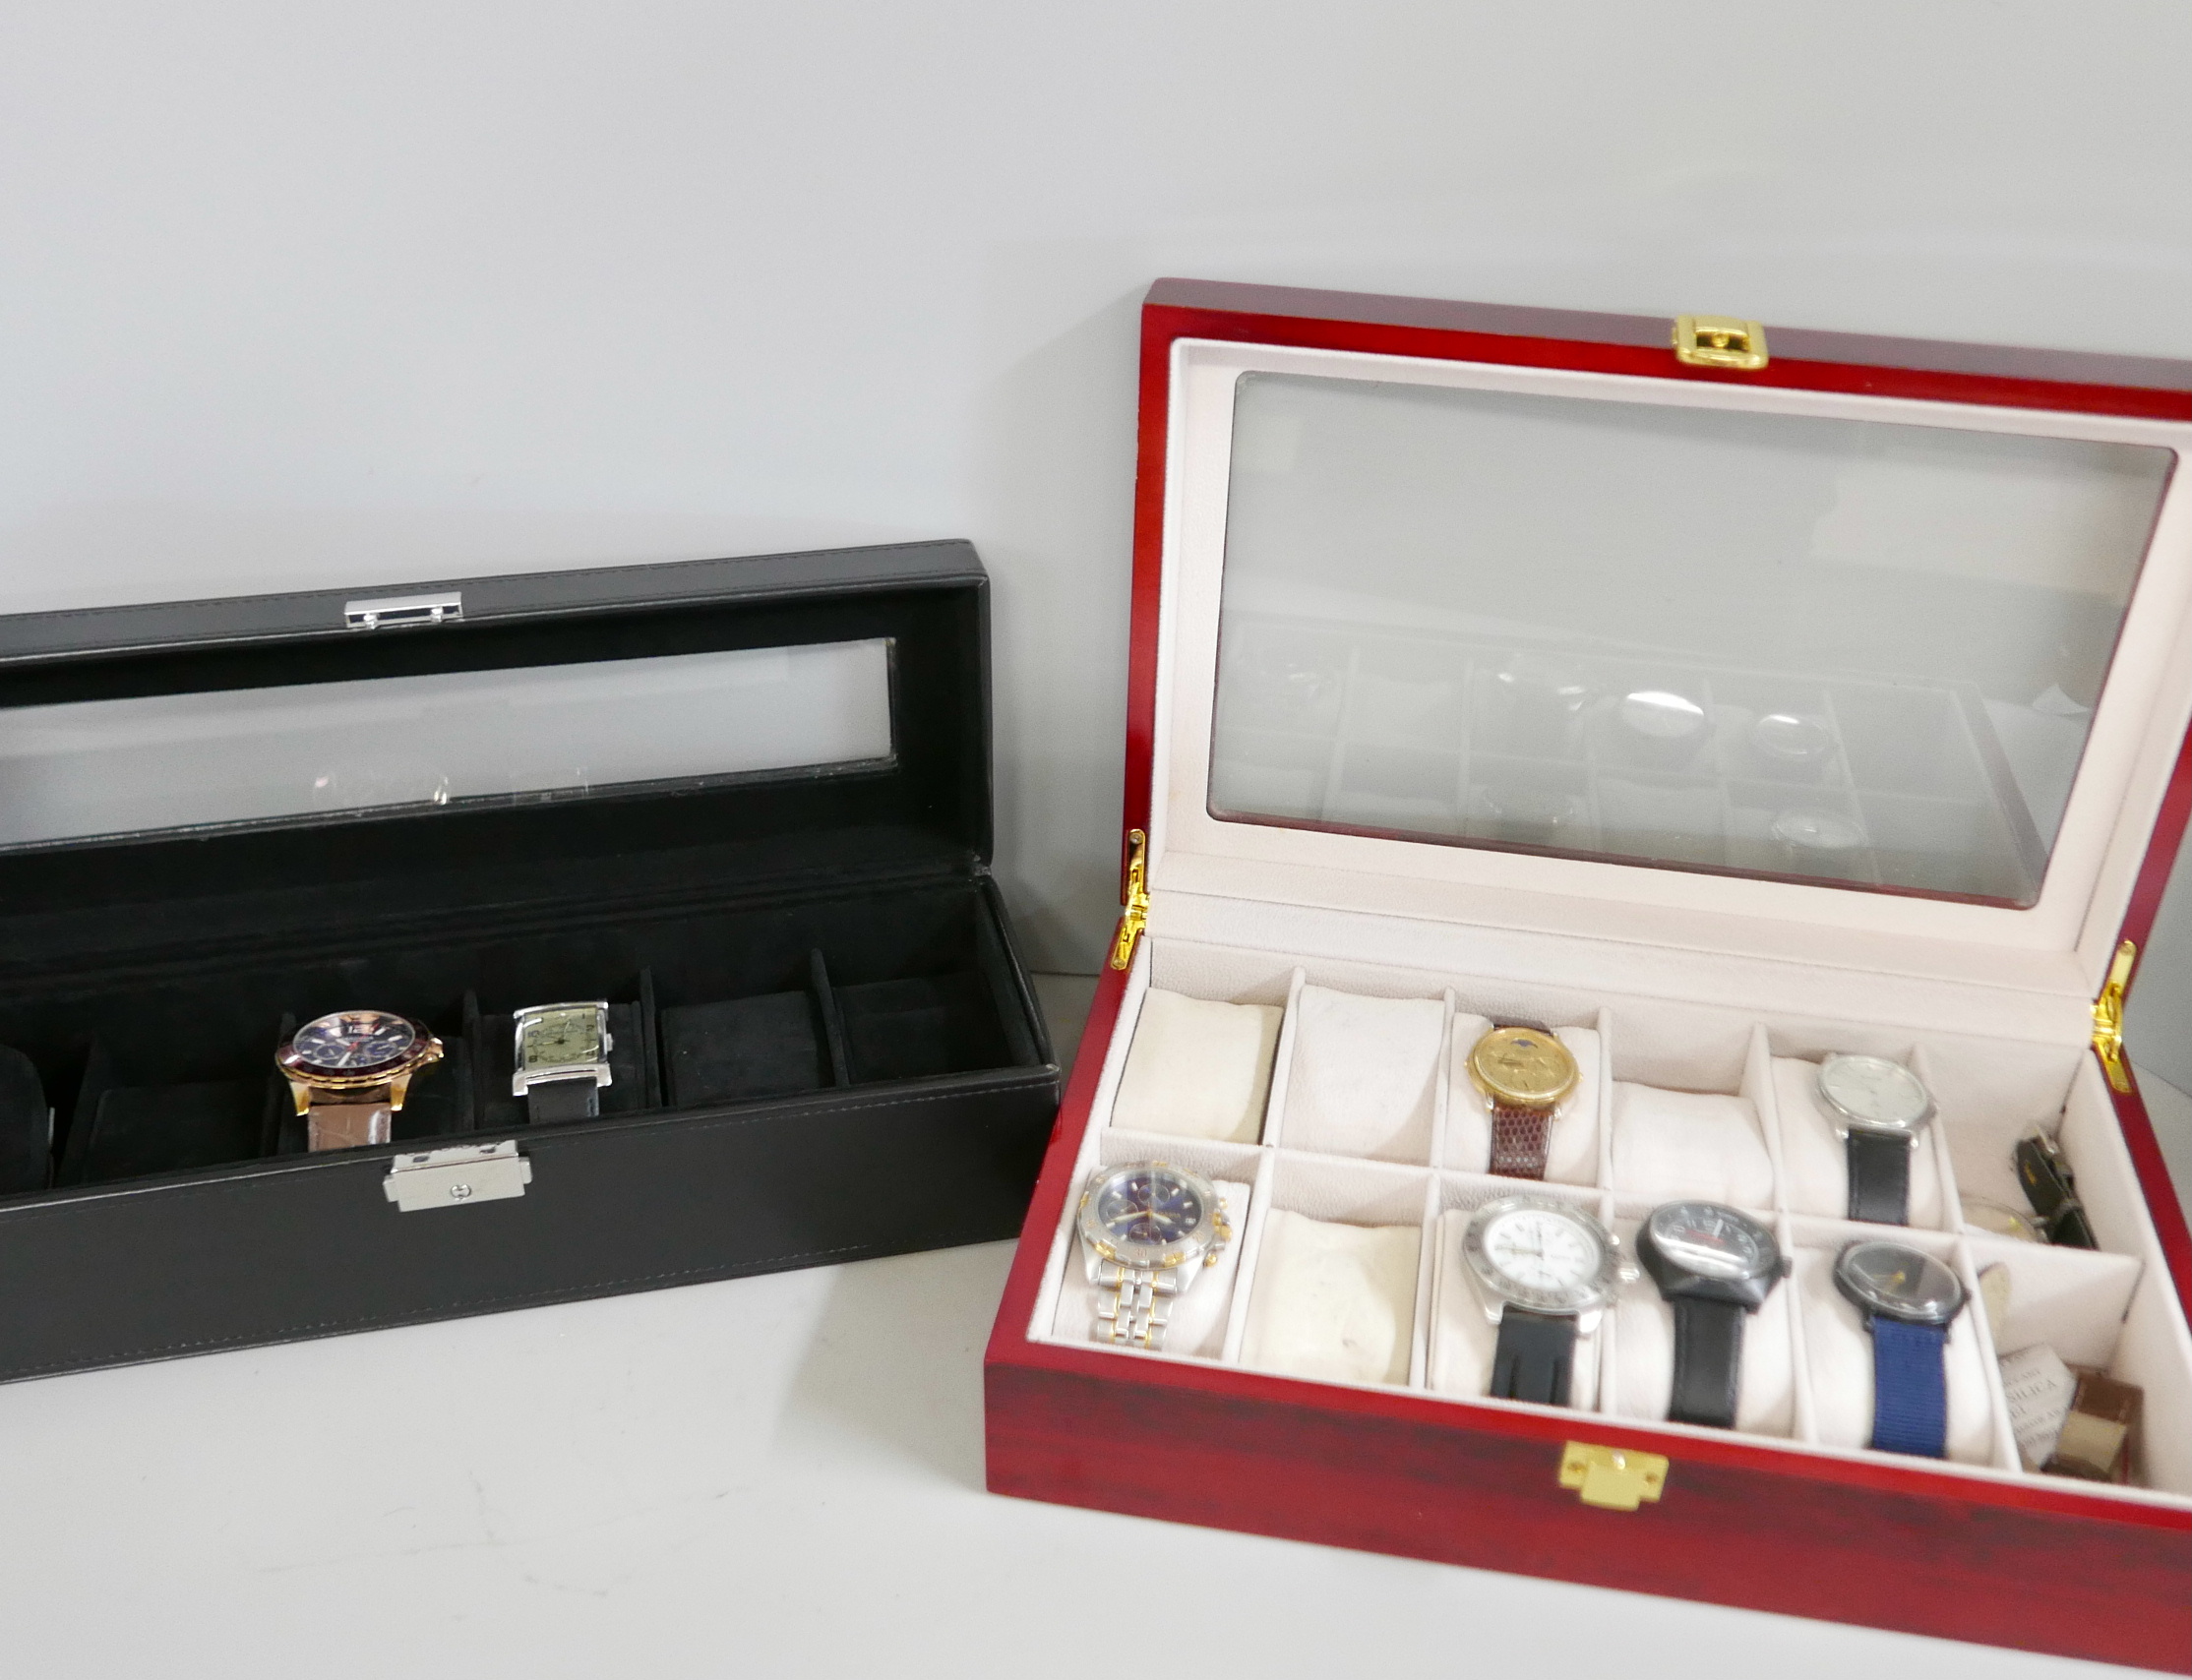 Ten gentleman's wristwatches, Accurist, Lorus, Emporio Armani, Continental, Pulsar, Seiko,